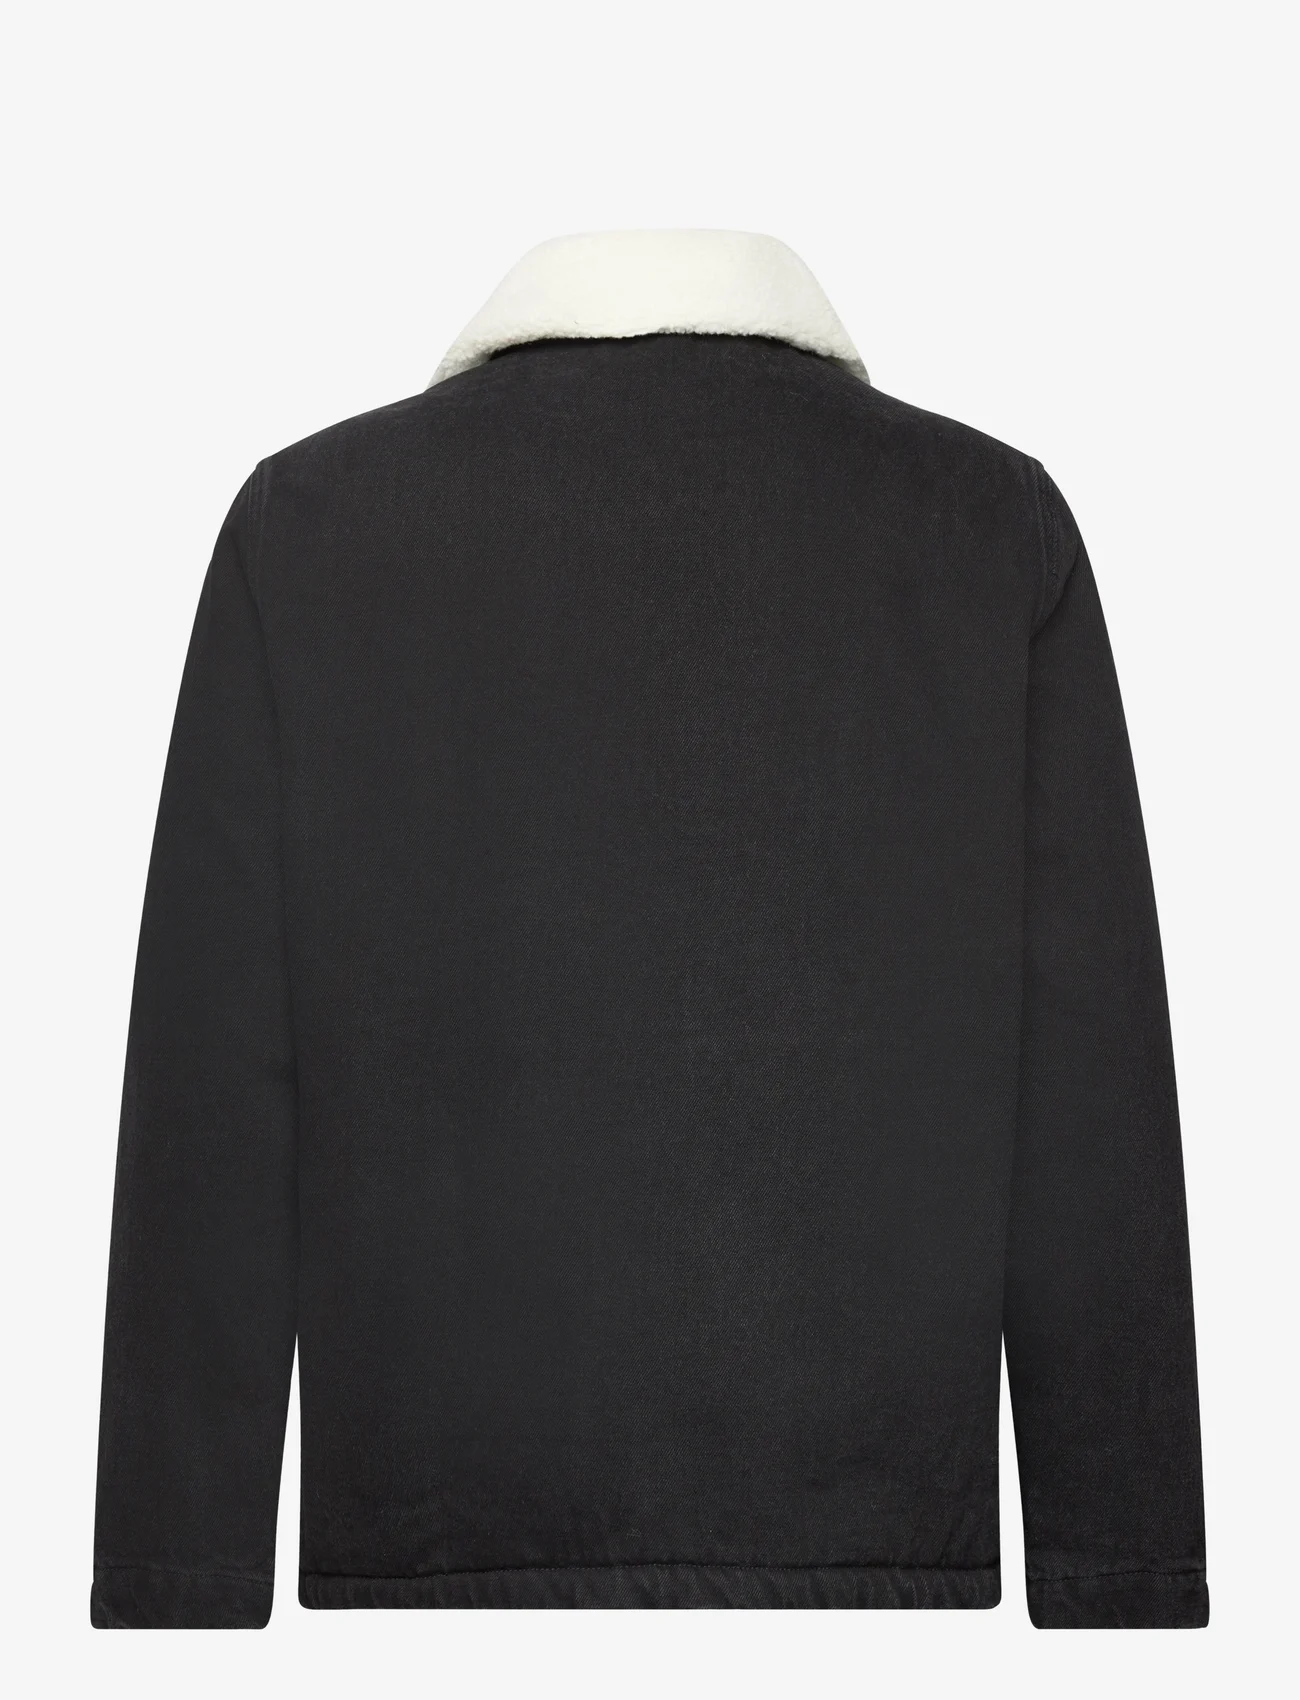 Mango - Shearling denim jacket - vårjackor - open grey - 1